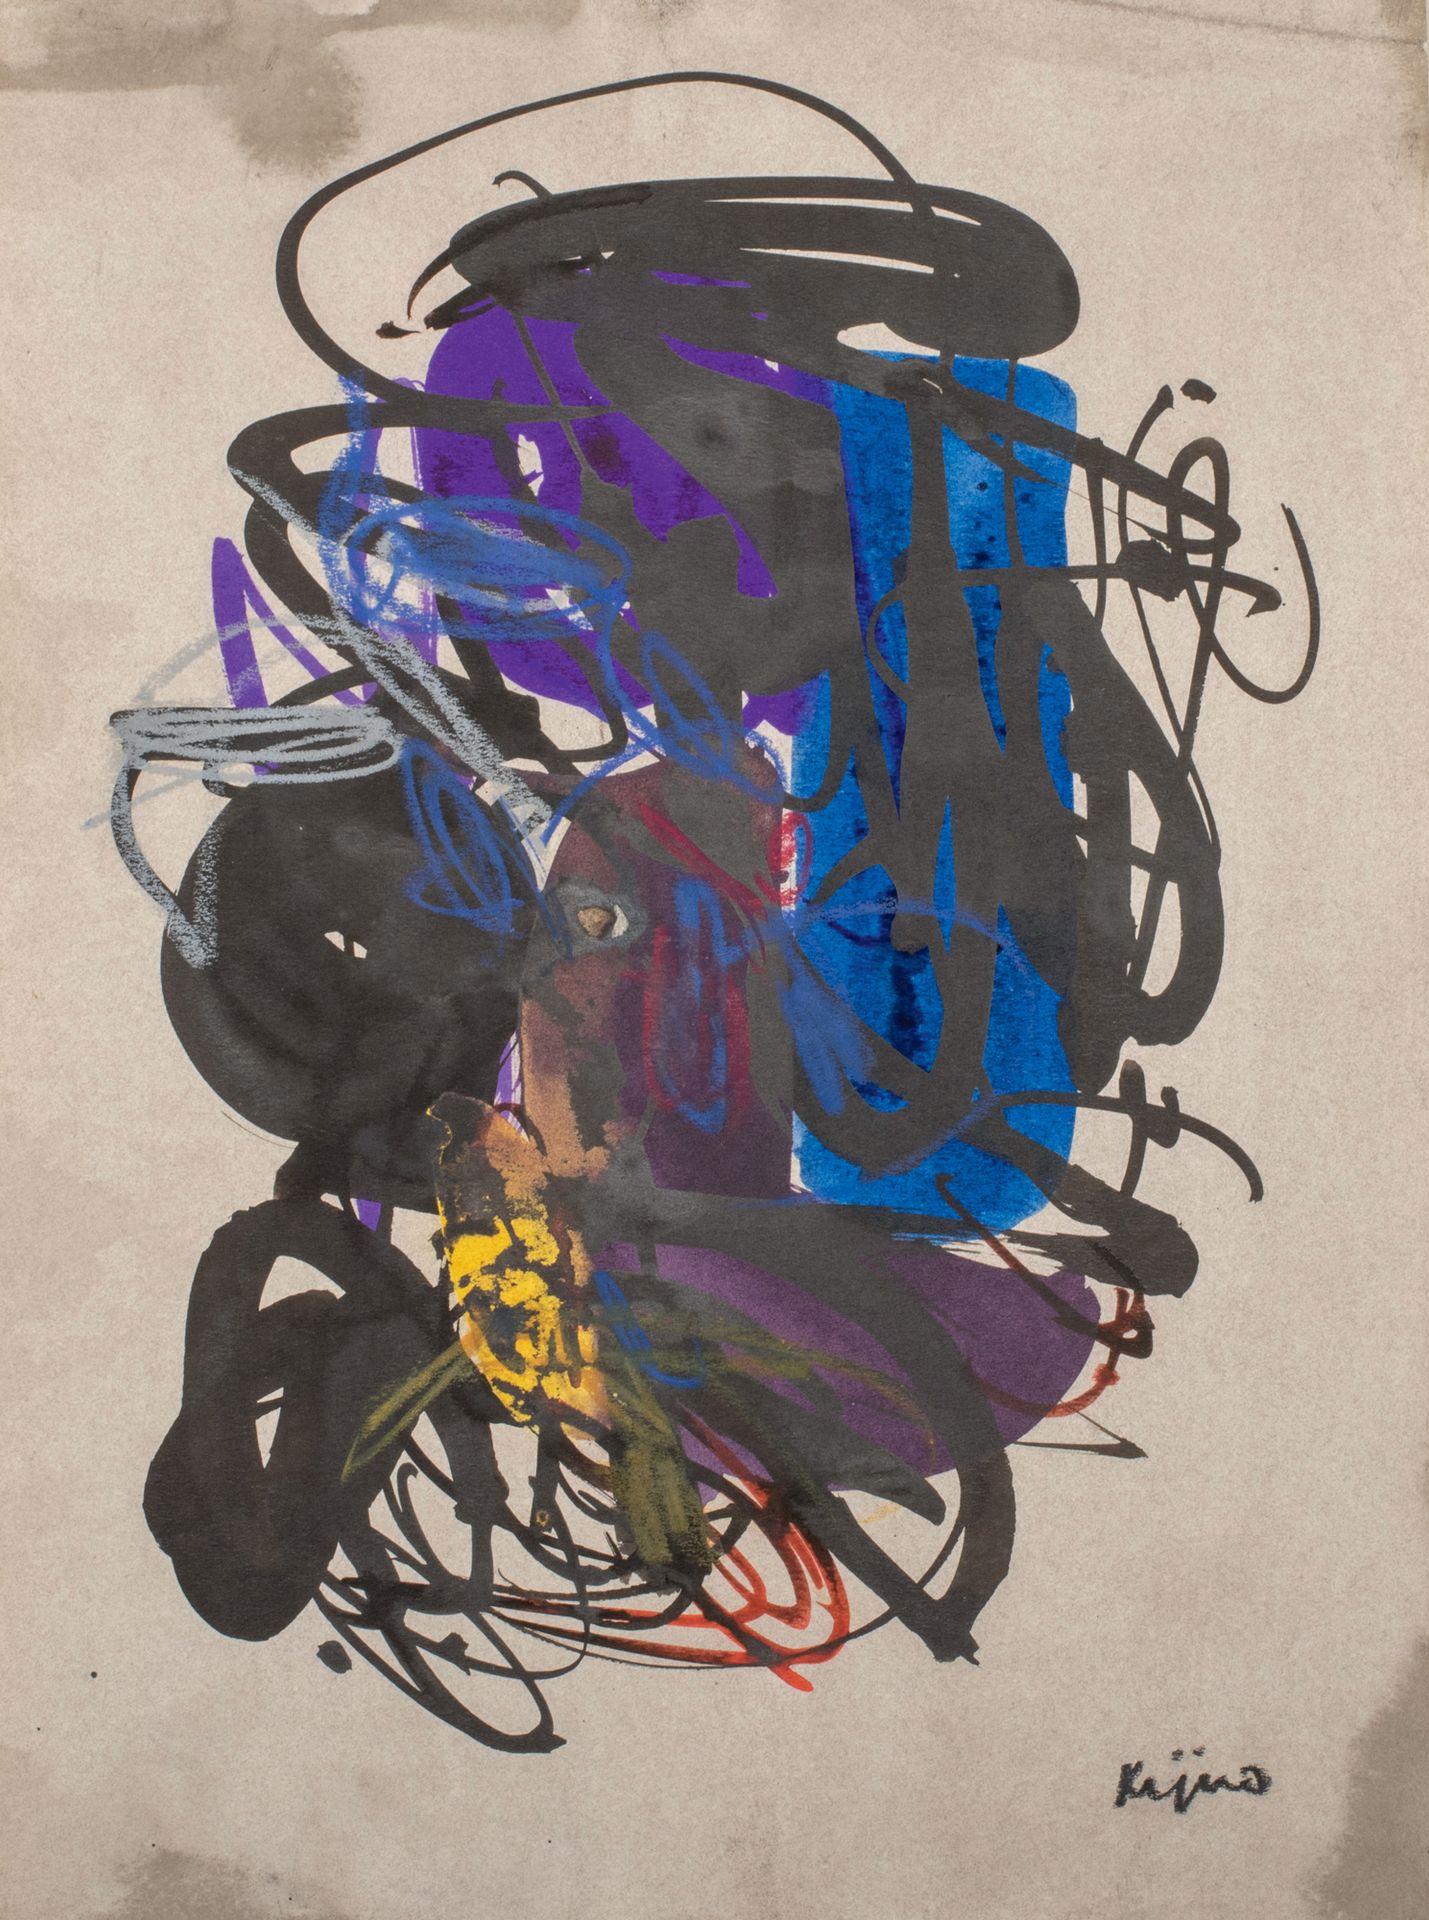 Ladislas KIJNO (1921-2012) 作文
纸上混合媒体（水粉、墨水和彩色铅笔），右下角签名 41 x 30 cm